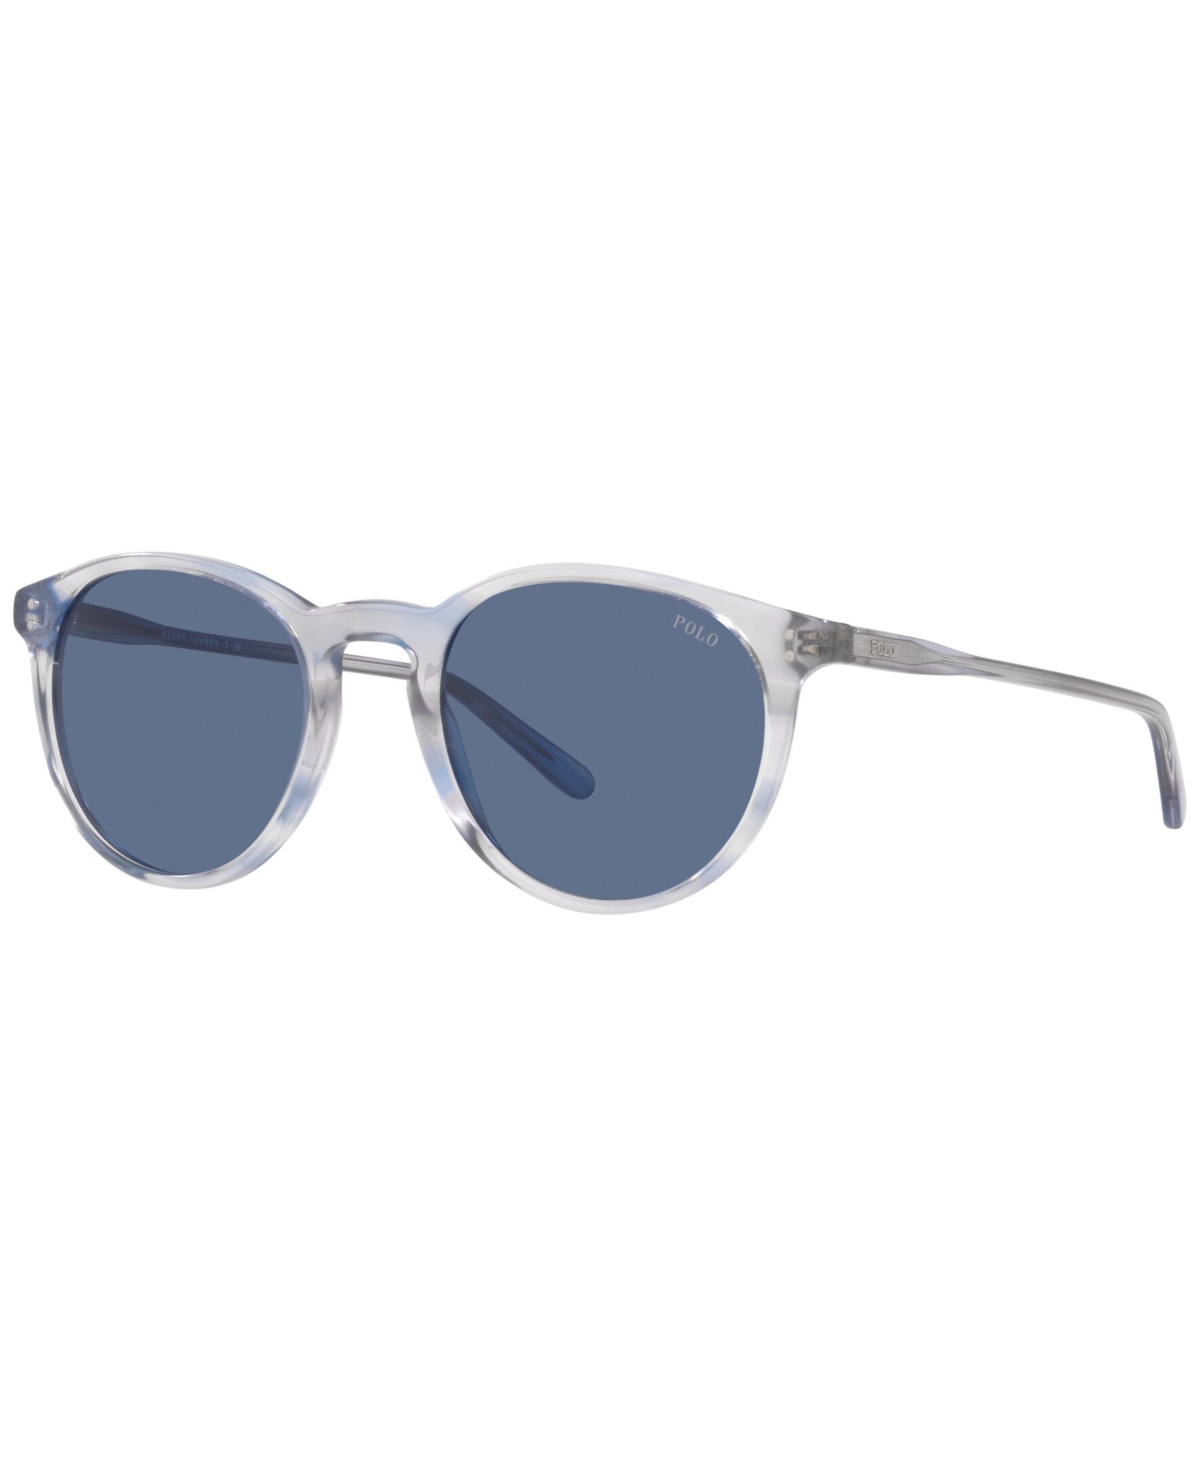 Polo Ralph Lauren Men's Blue Light Sunglasses, 50 In Shiny Transparent Blue,brown